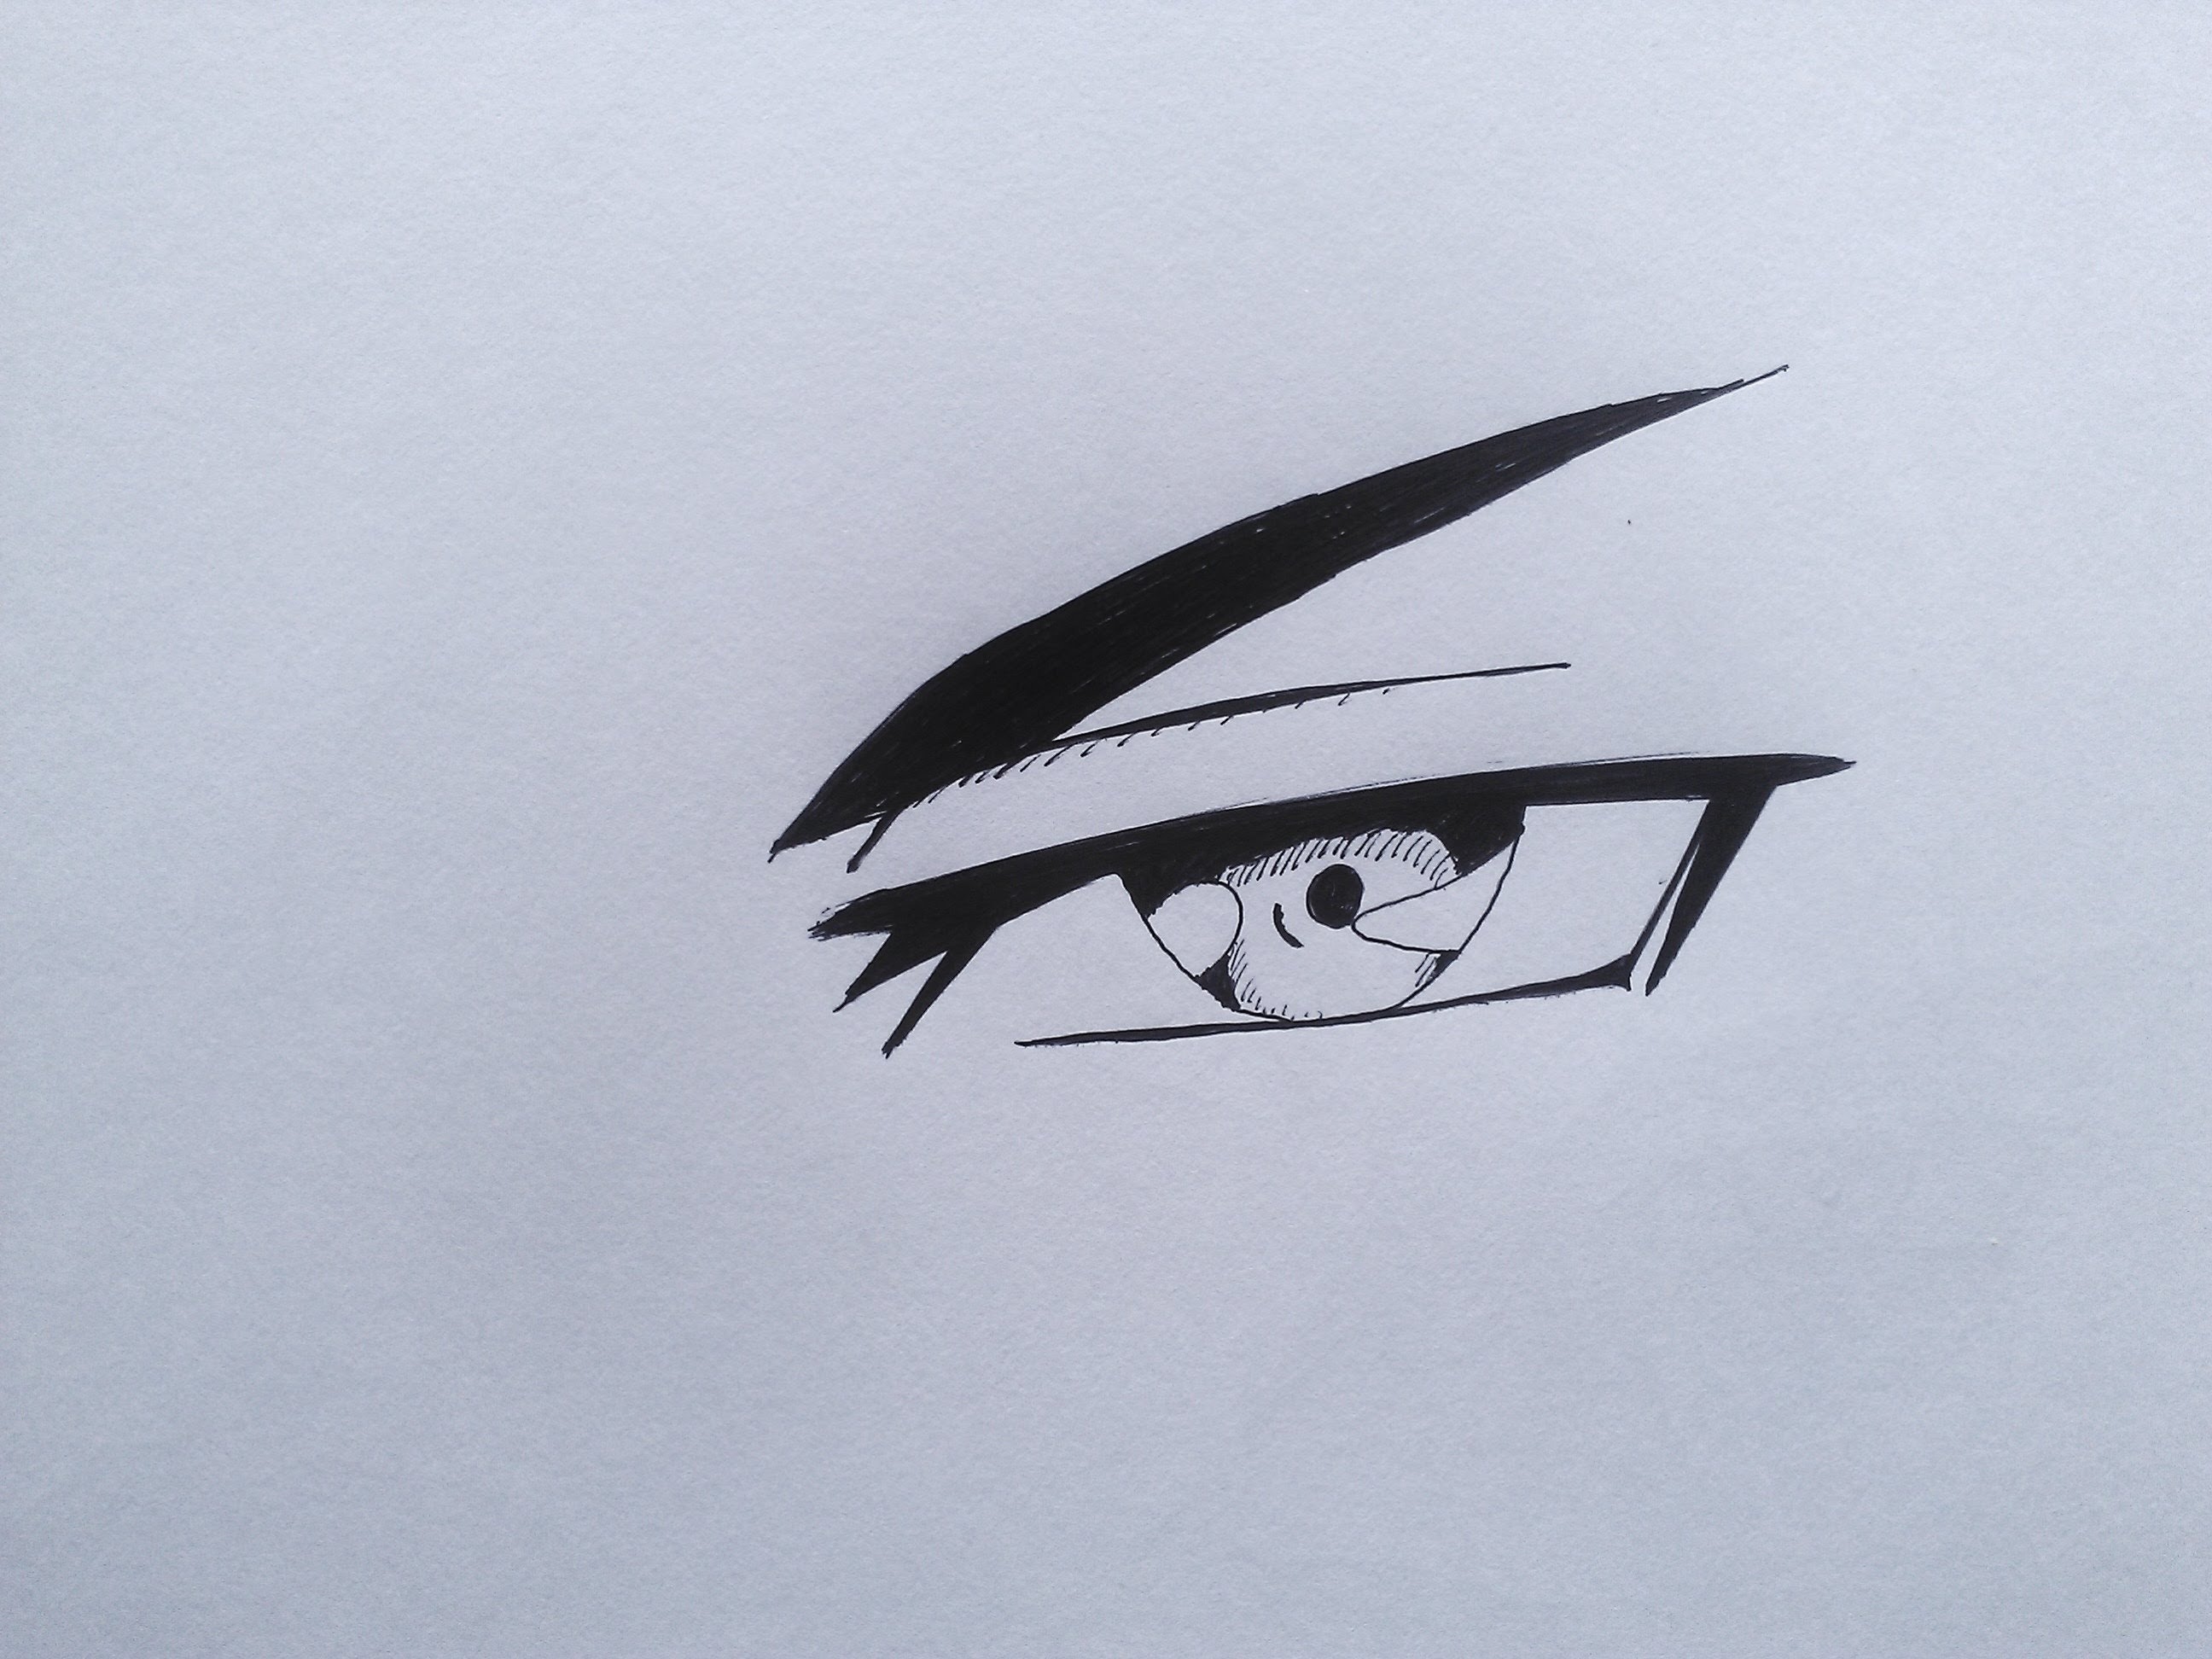 How To Draw Angry Eyes Anime Halloween Drawings Halloweendrawings